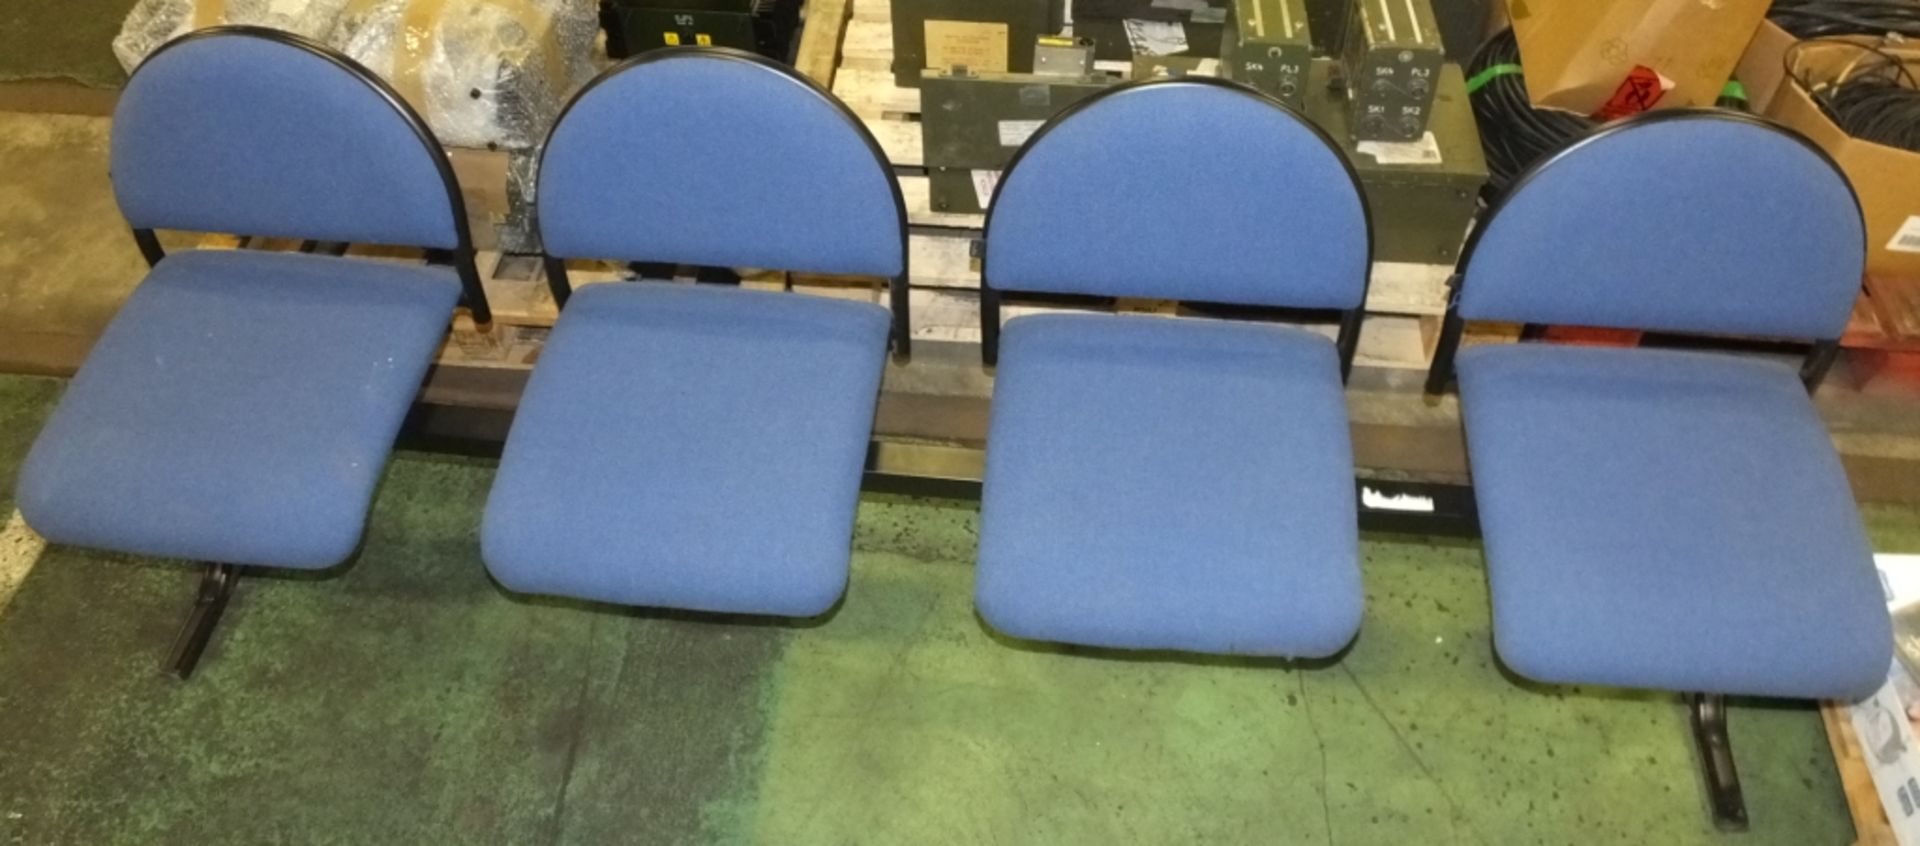 4 seater modular chair - blue